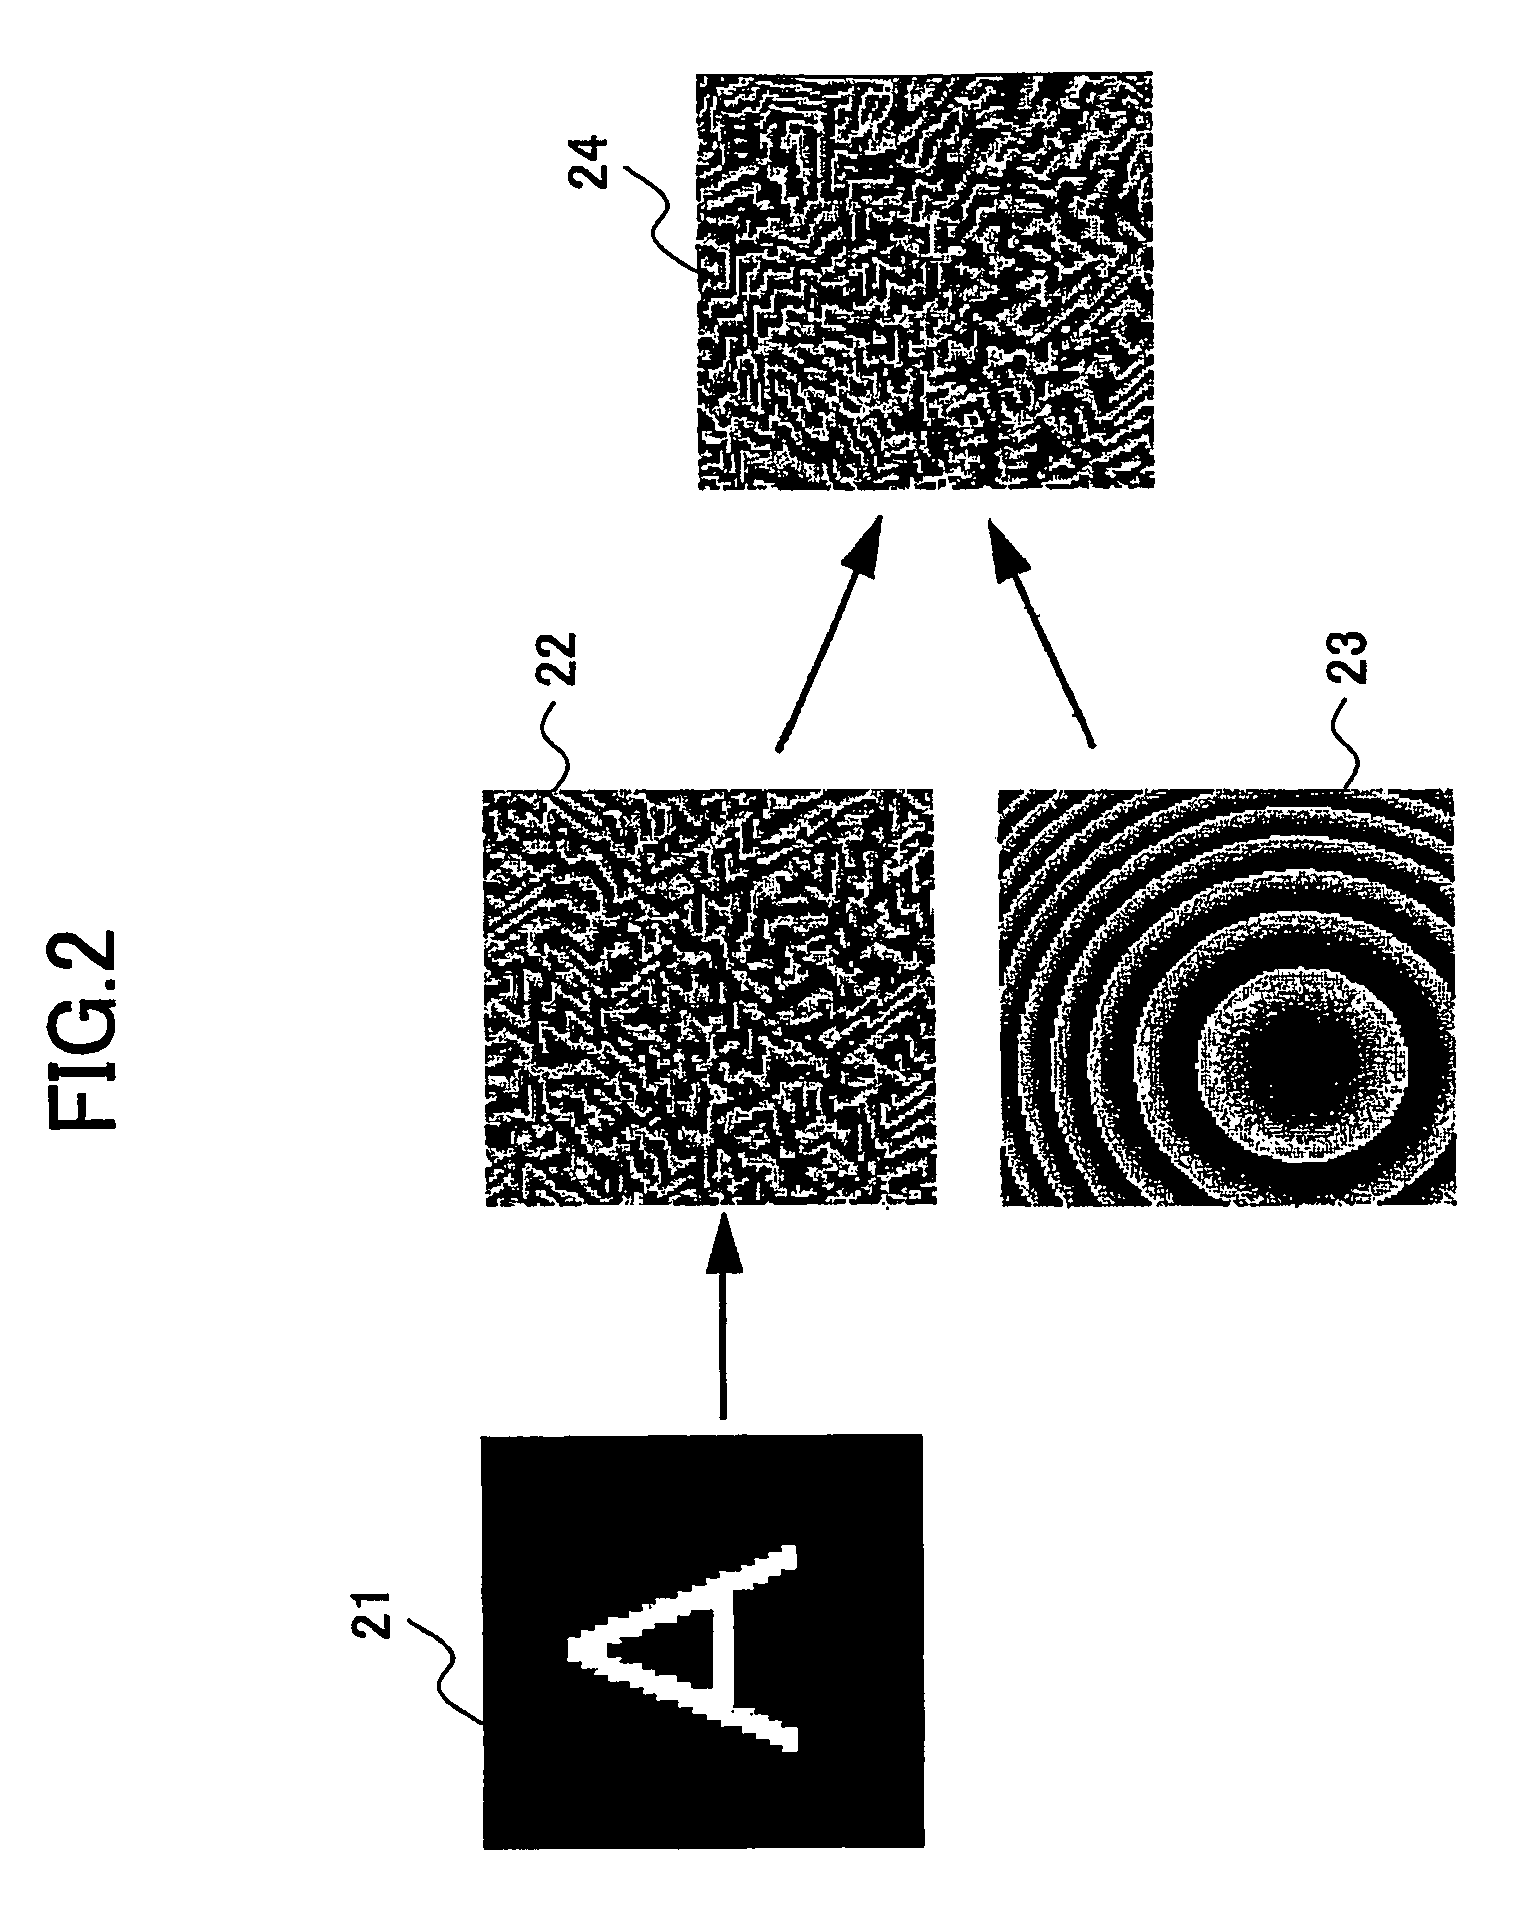 Laser processing apparatus using distinct horizontal and vertical data sets